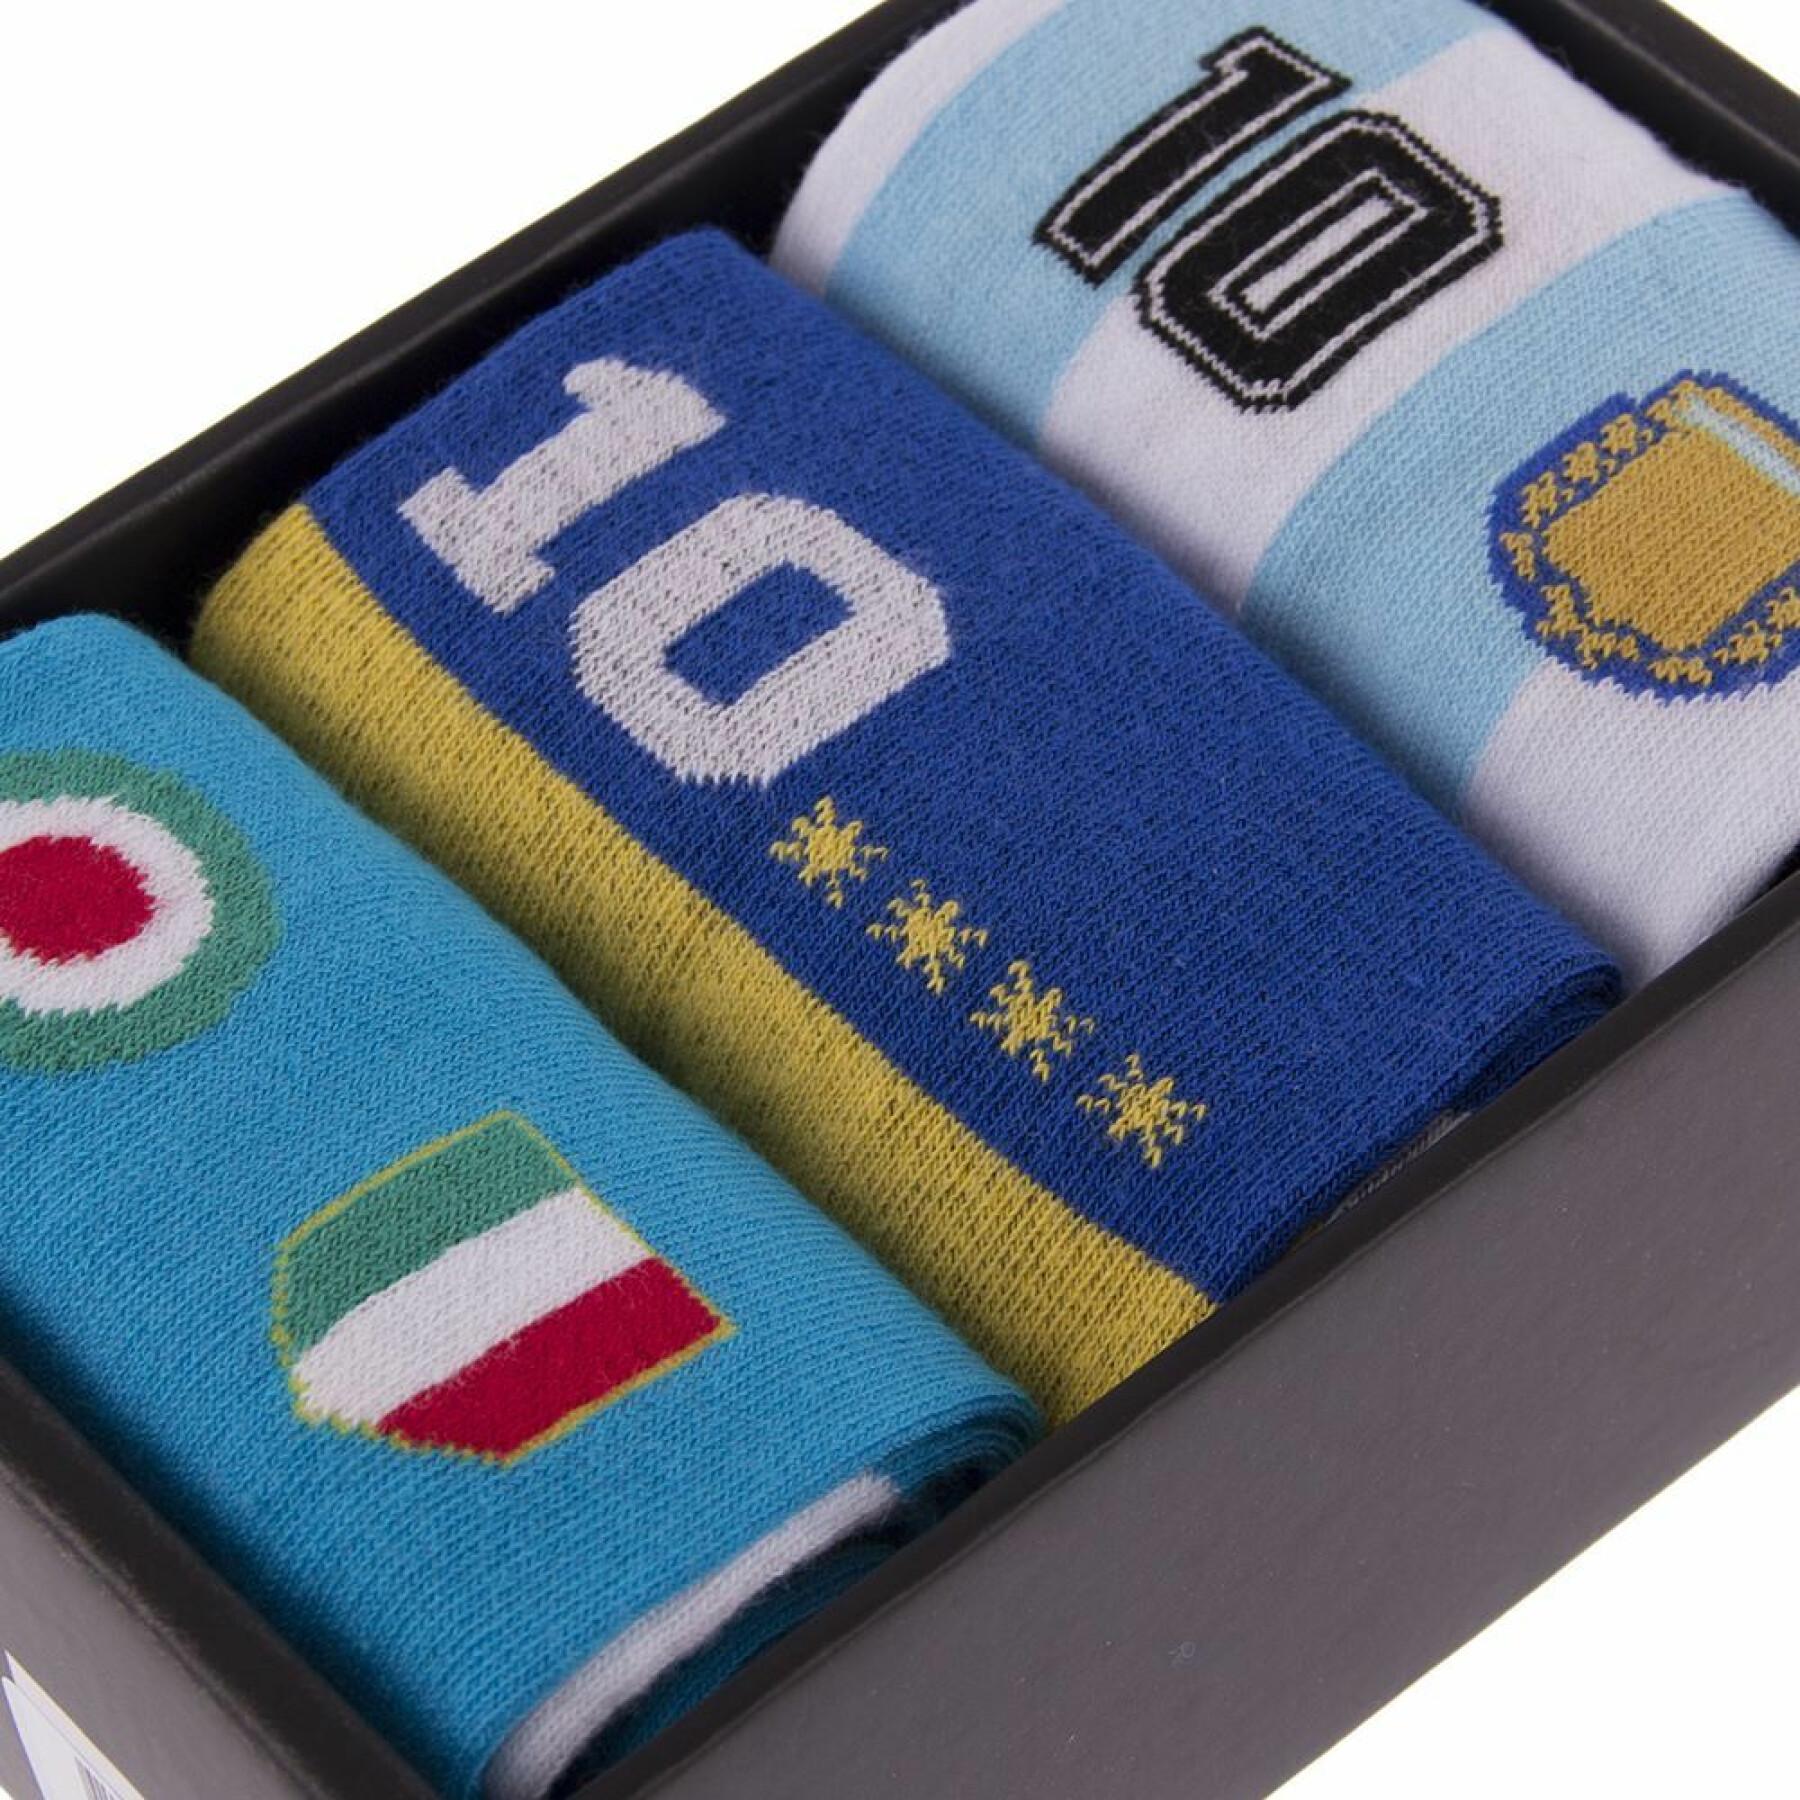 Socken Box Set Copa Football Maradona Number 10